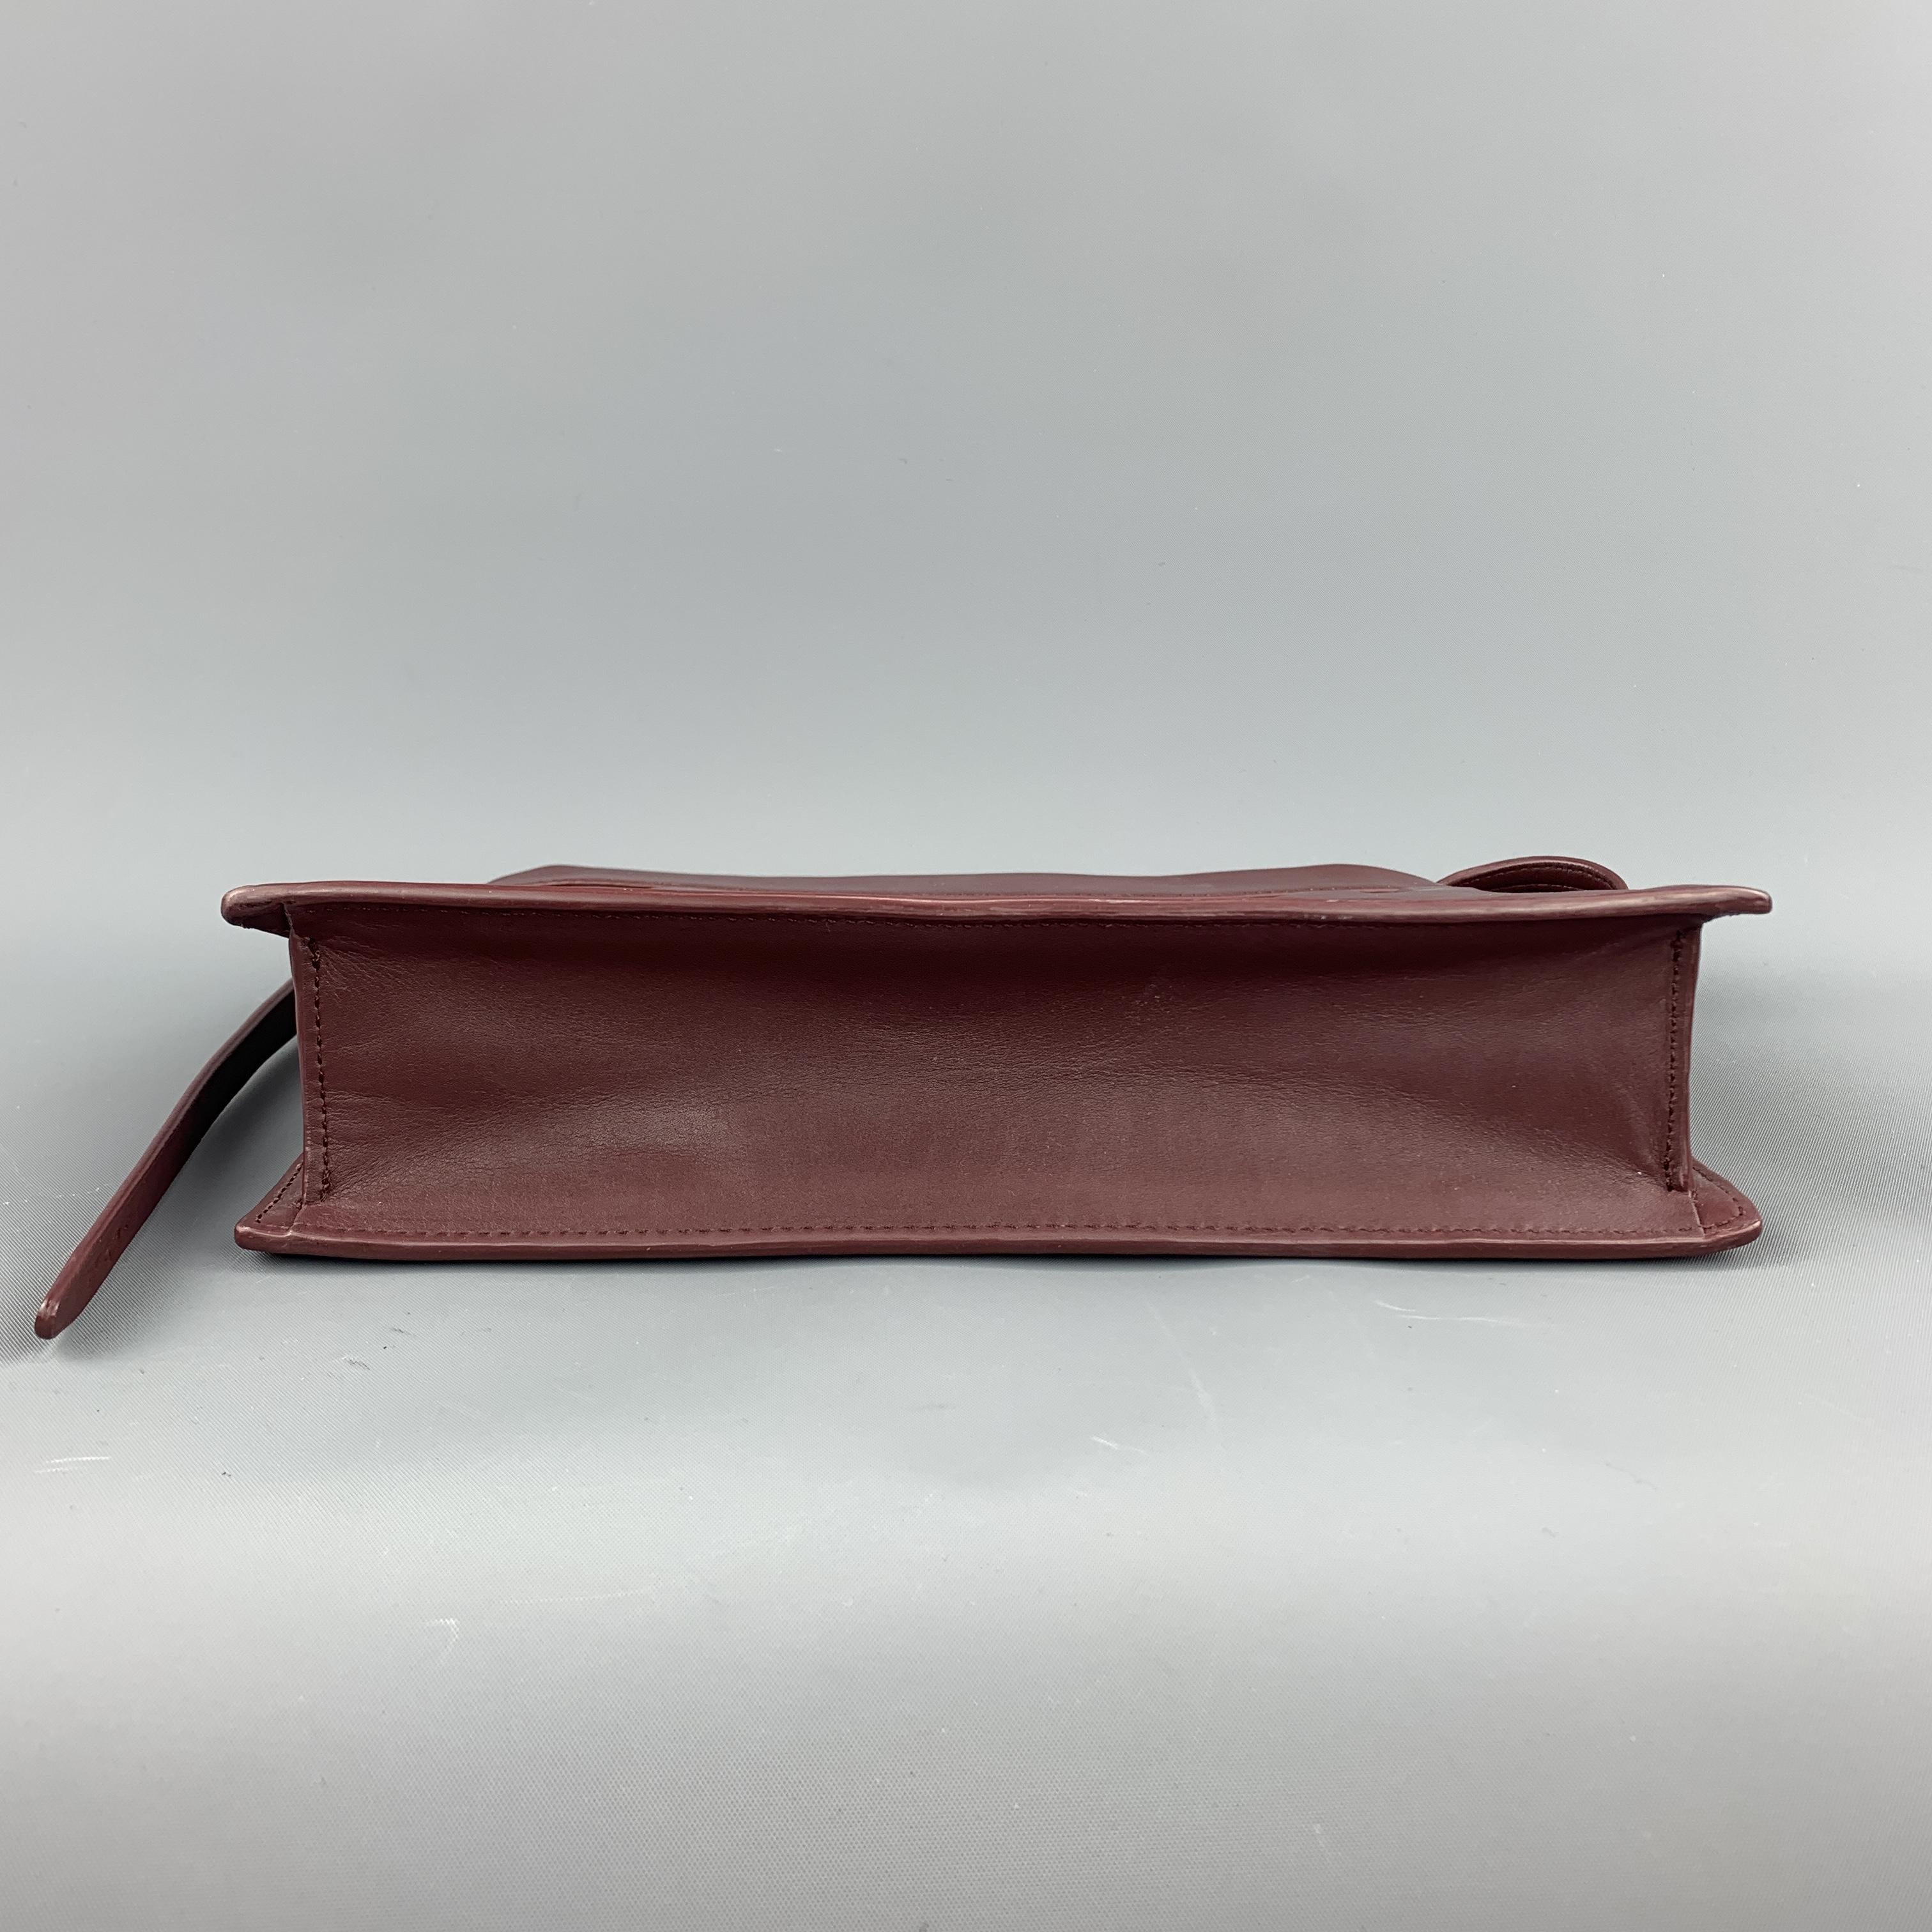 3.1 PHILLIP LIM Burgundy Leather CASH ONLY Clutch Handbag 3